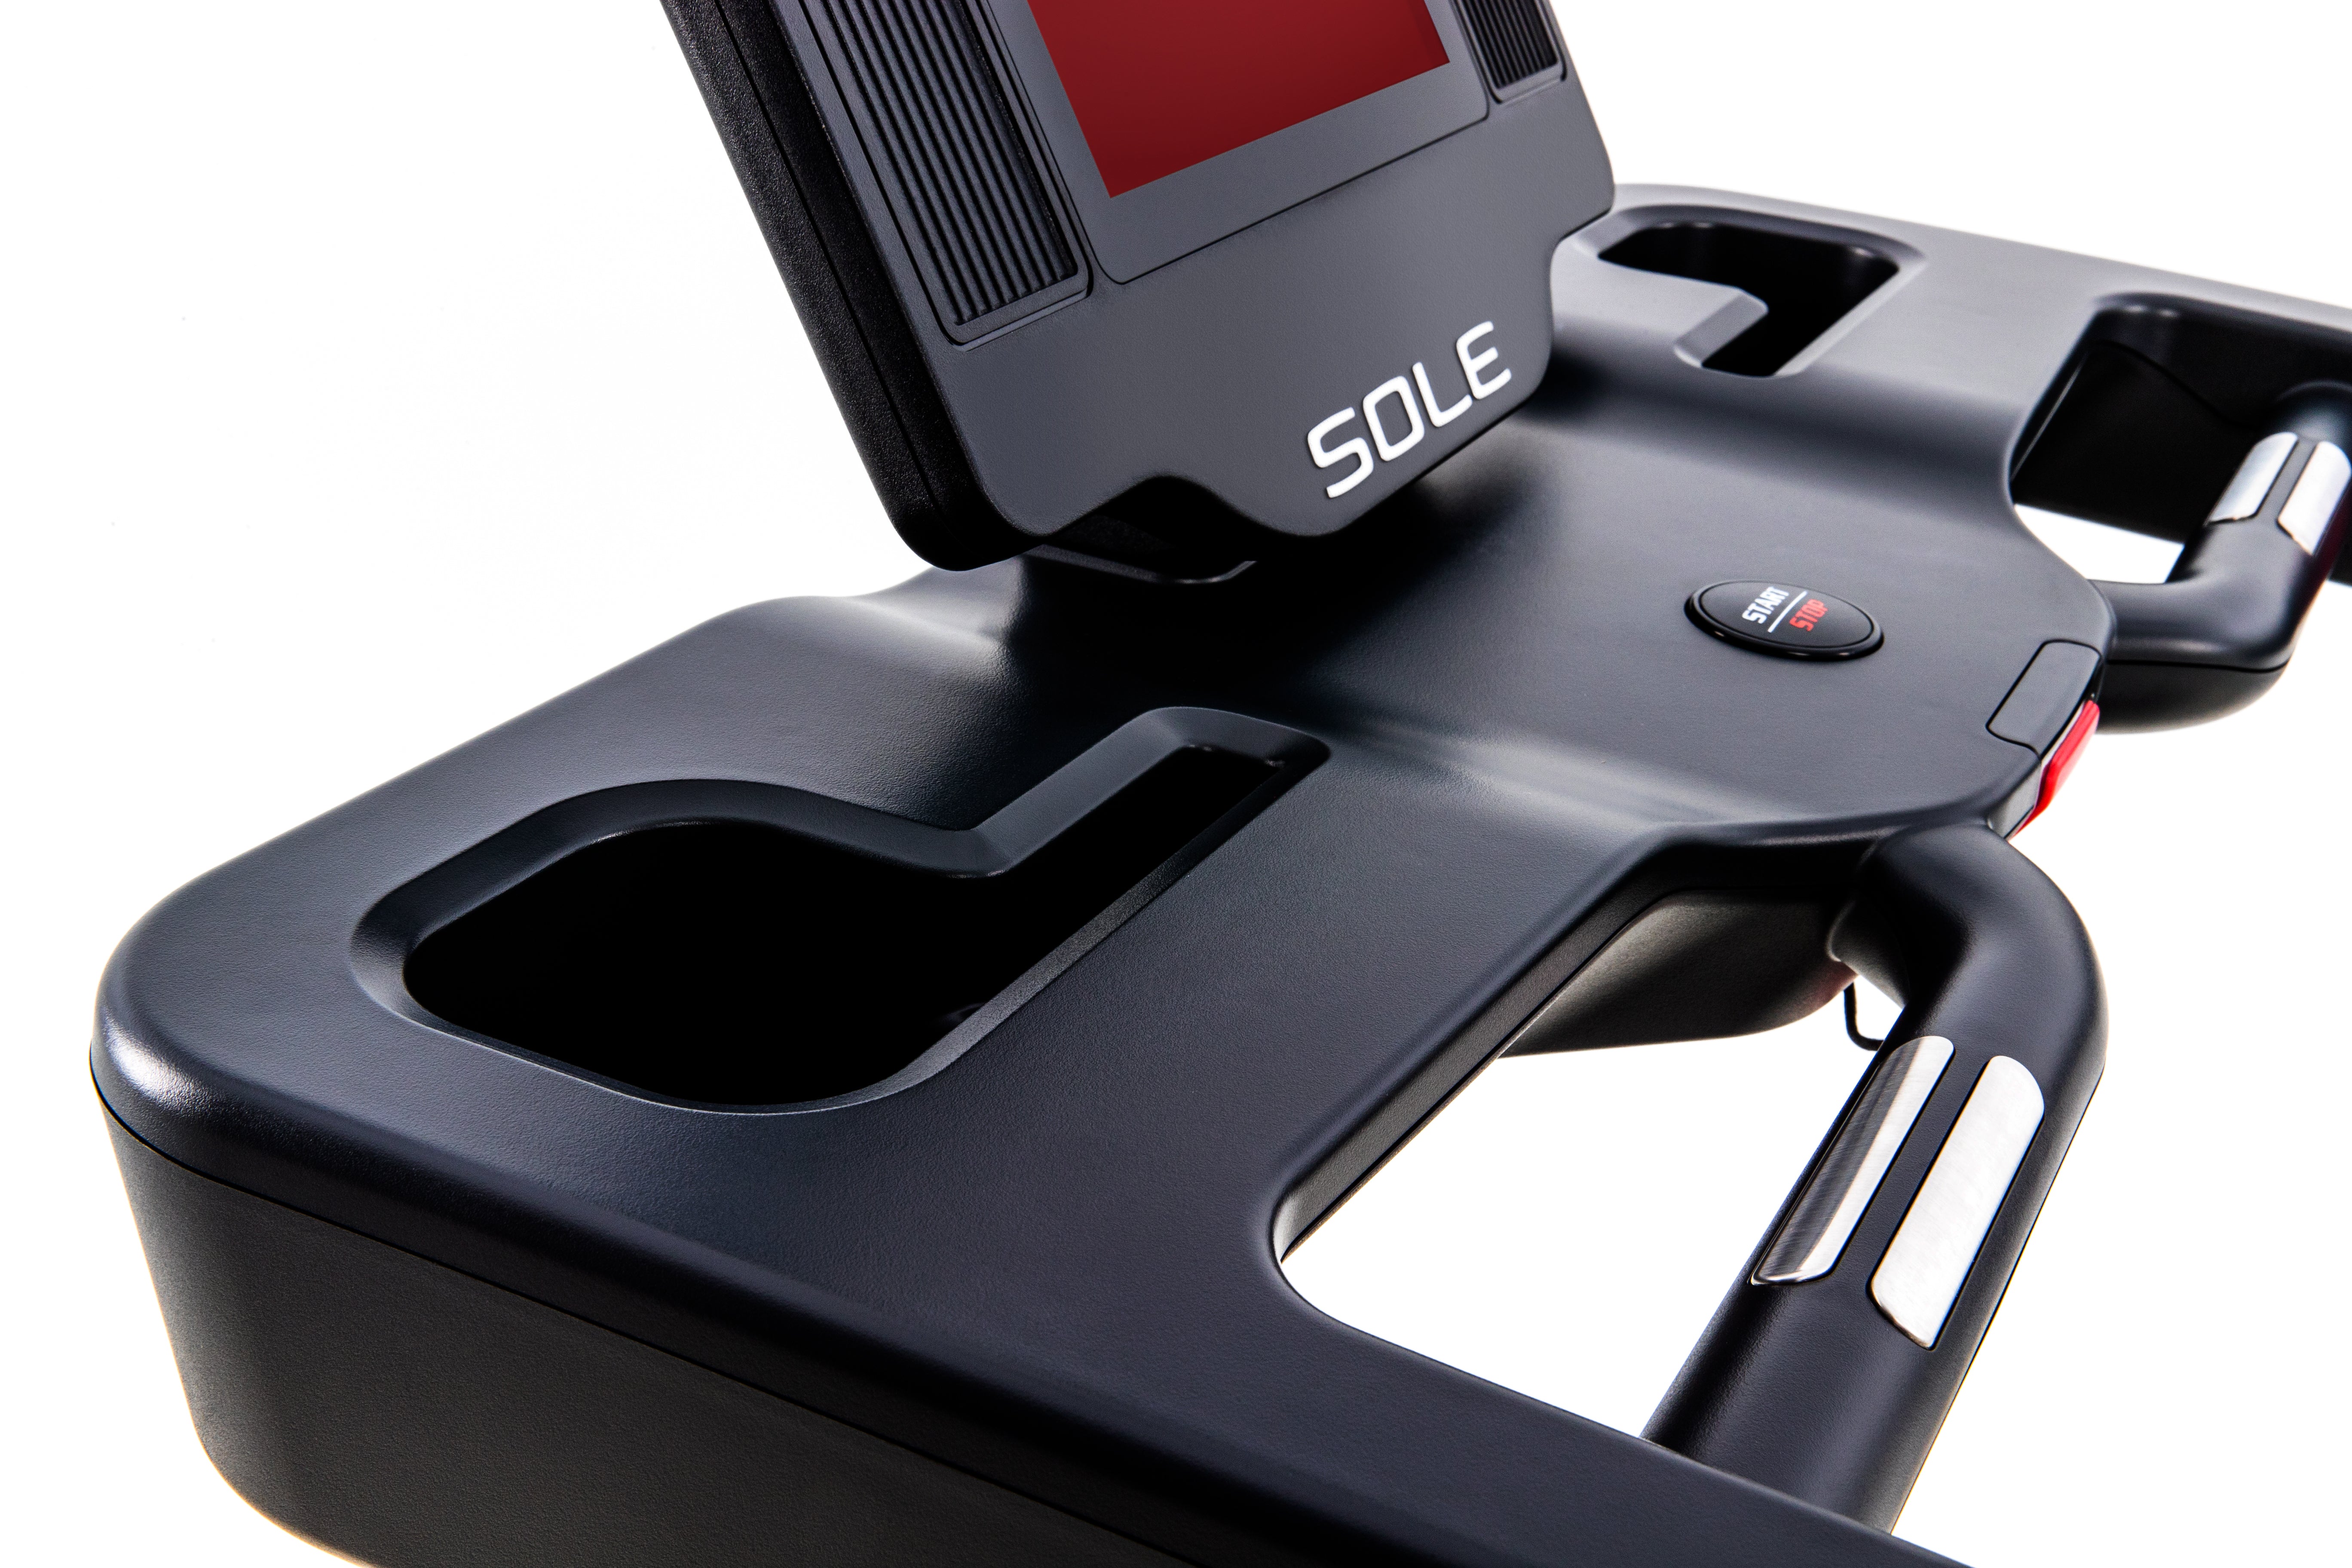 SOLE ST90 Treadmill (Last-Generation Model)